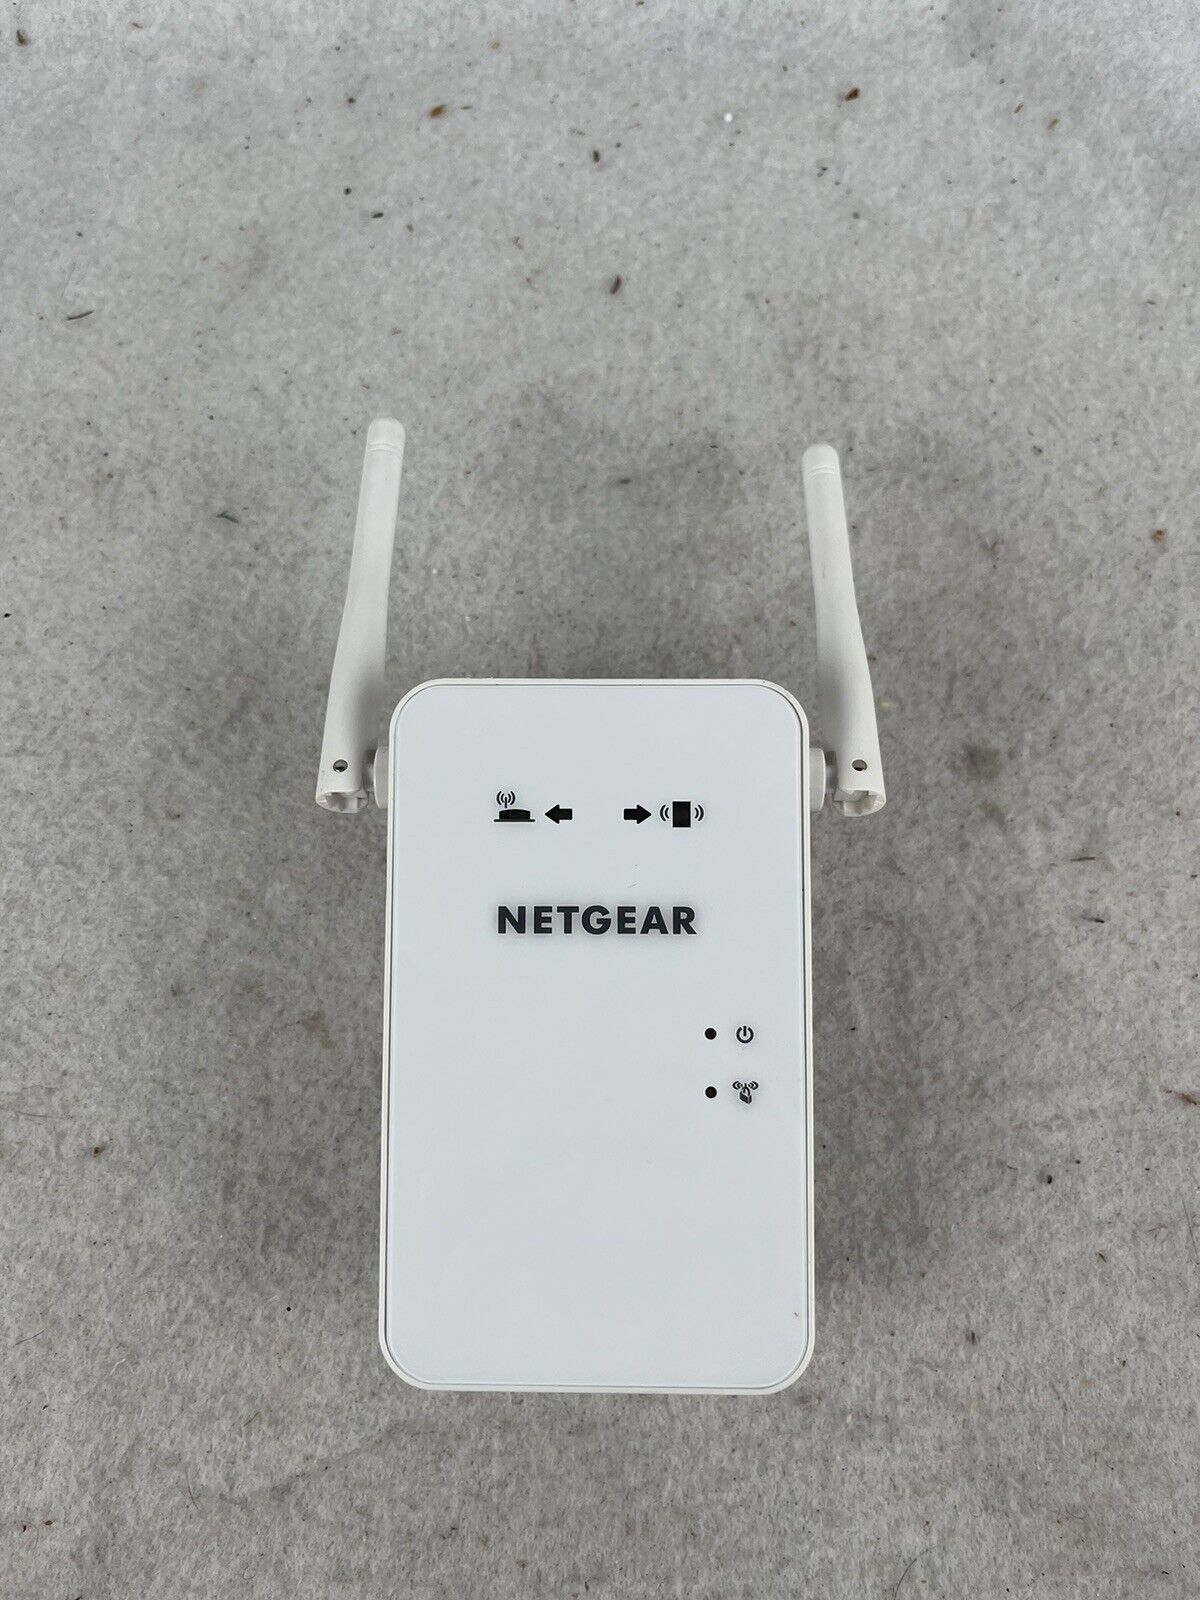 Netgear EX6100v2 Dual Band Gigabit WiFi Range Extender Repeater Access Point